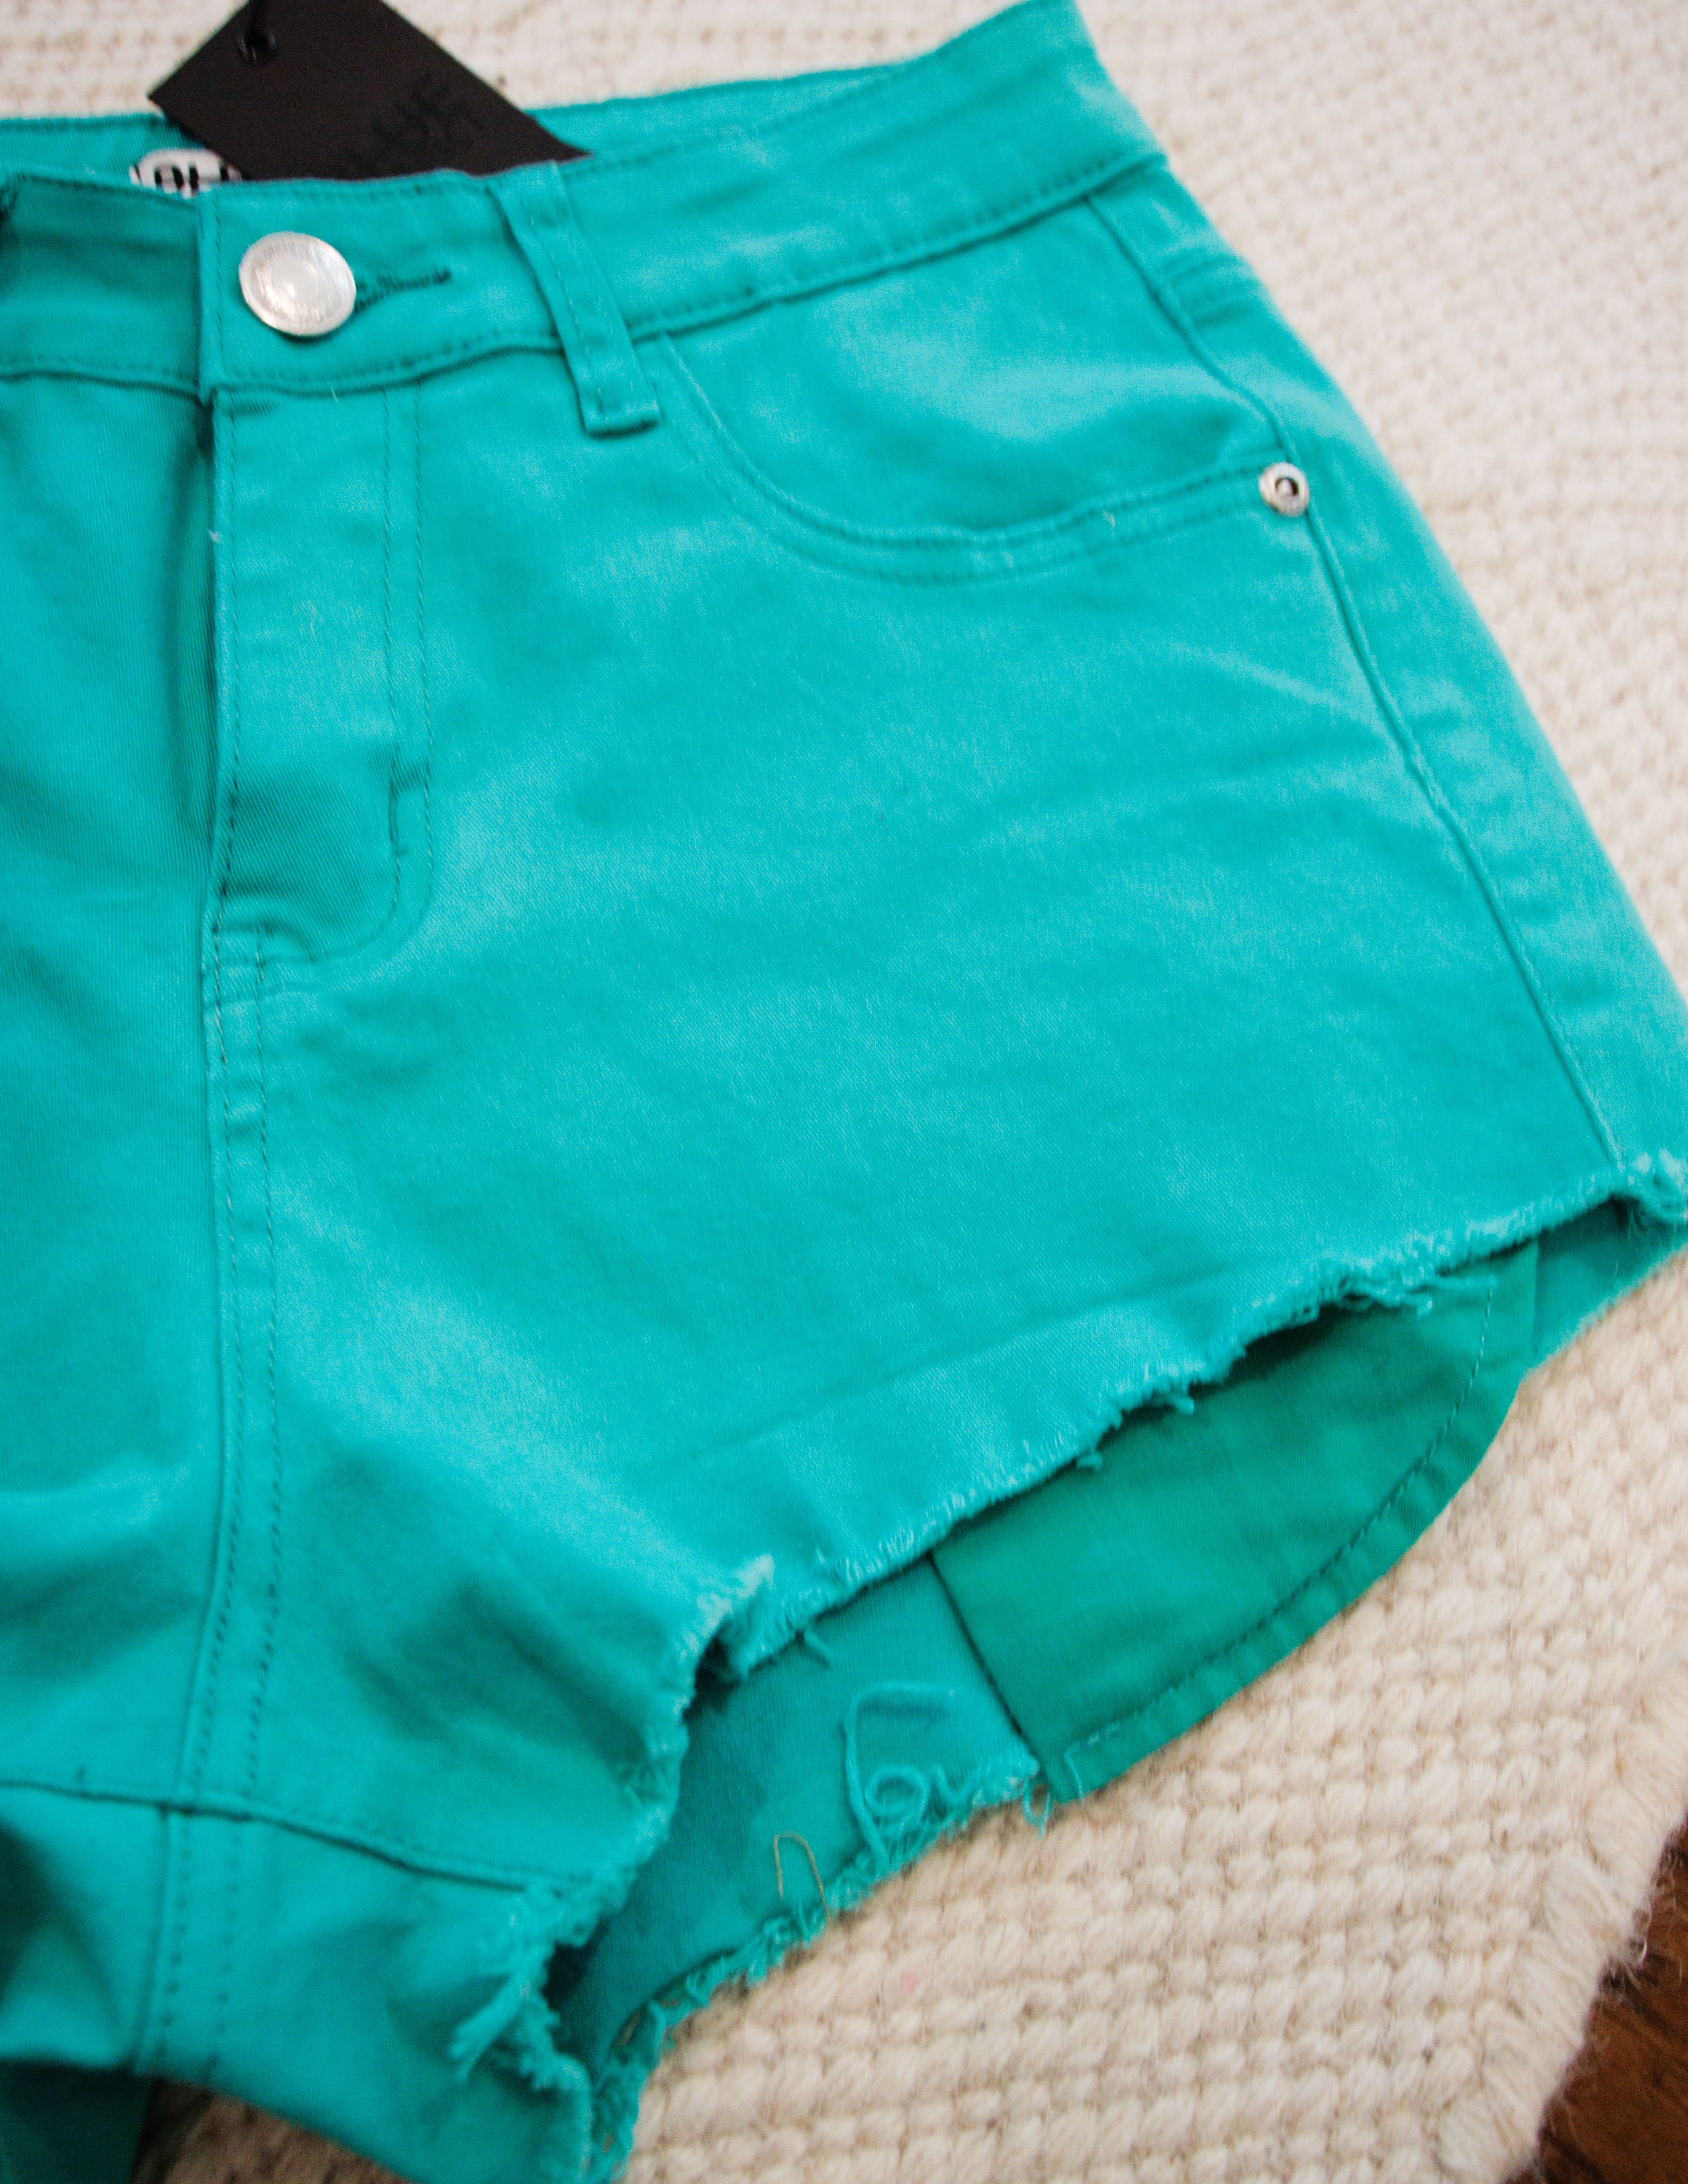 Green Mini Shorts